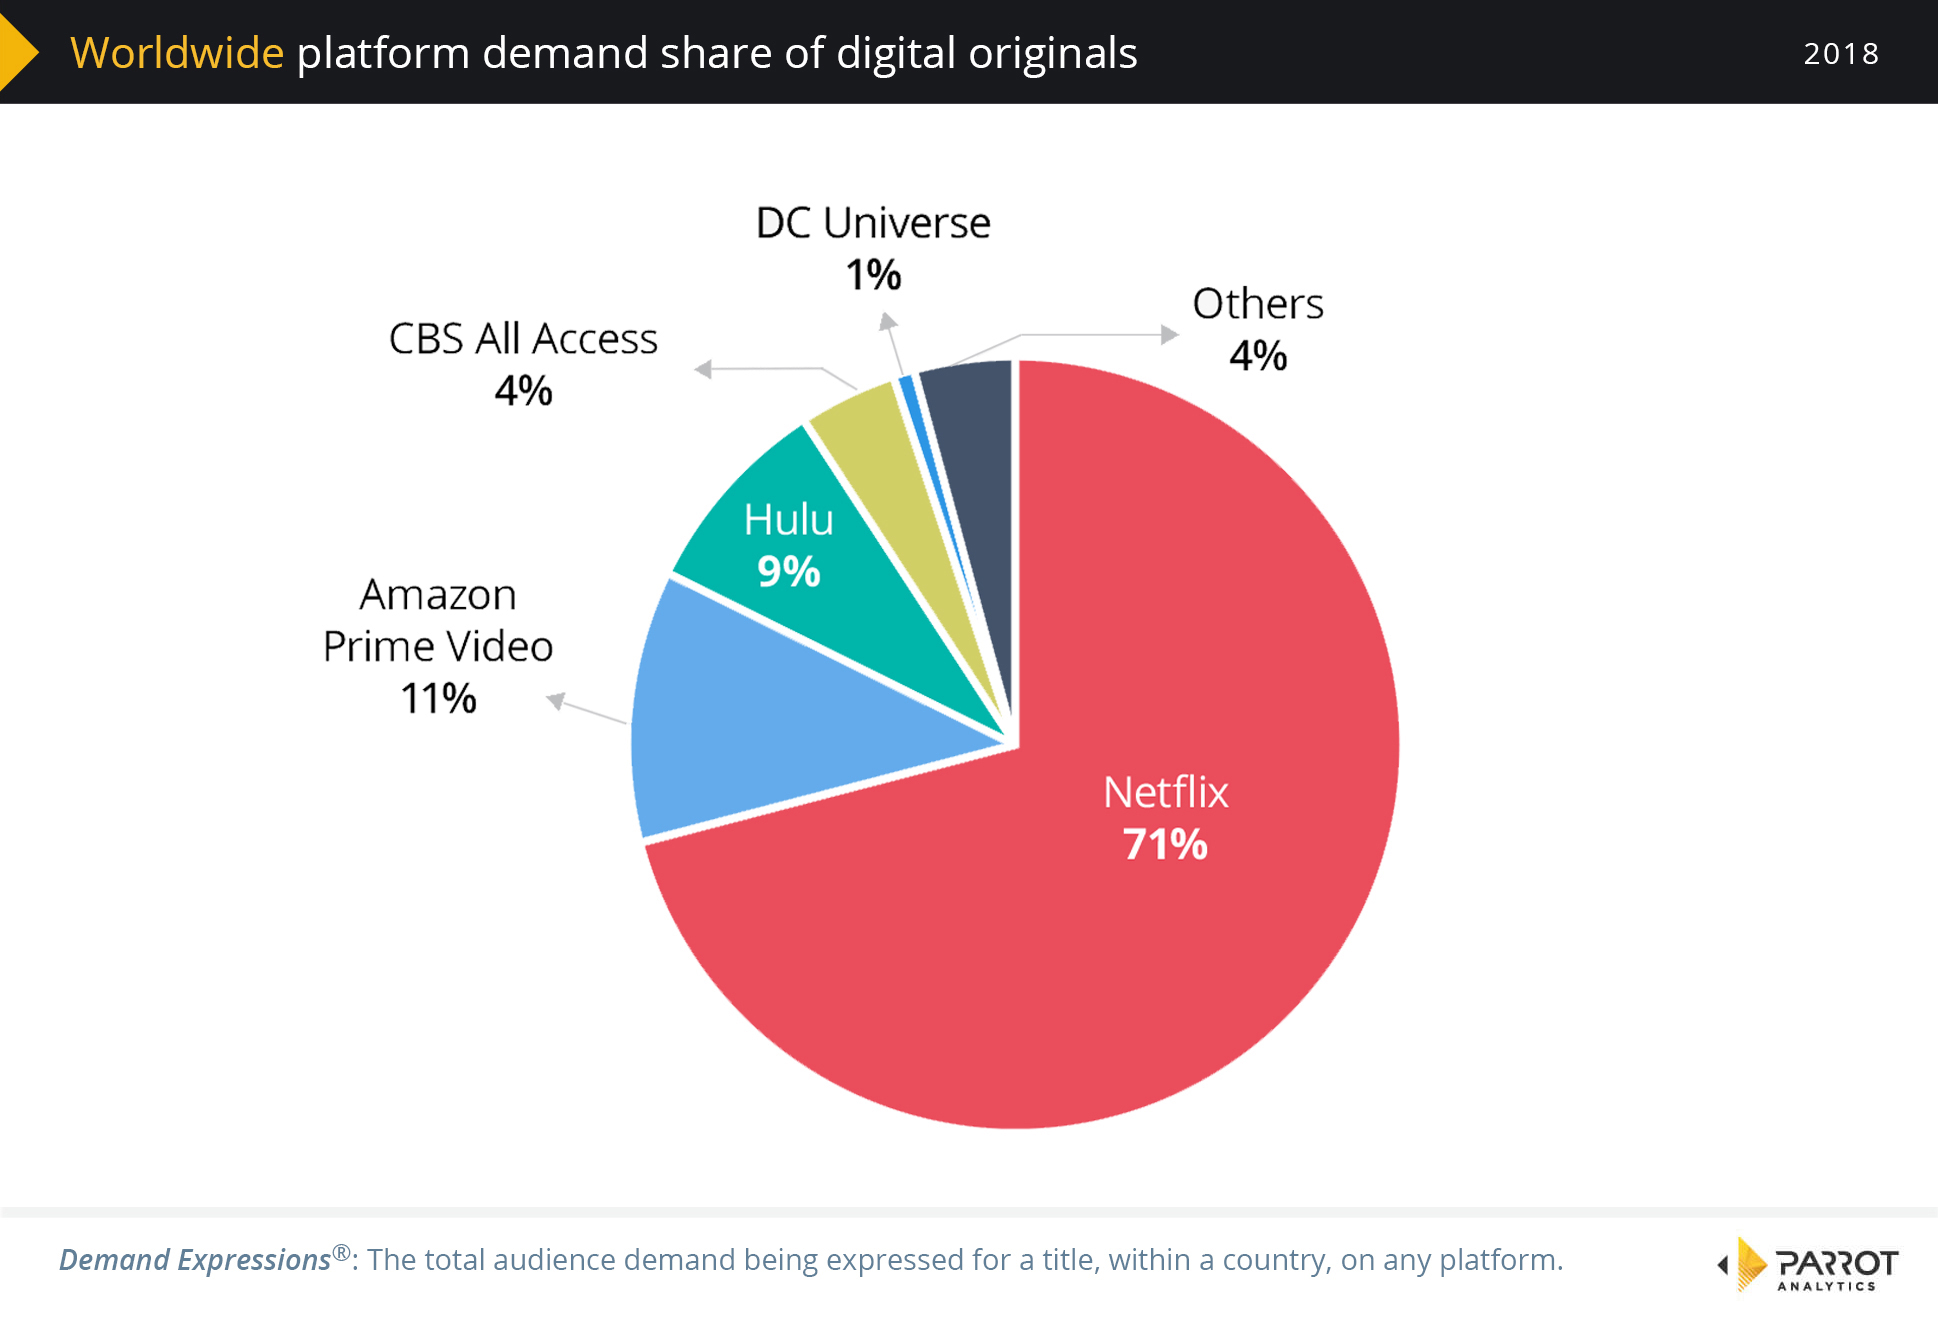 video on demand market size